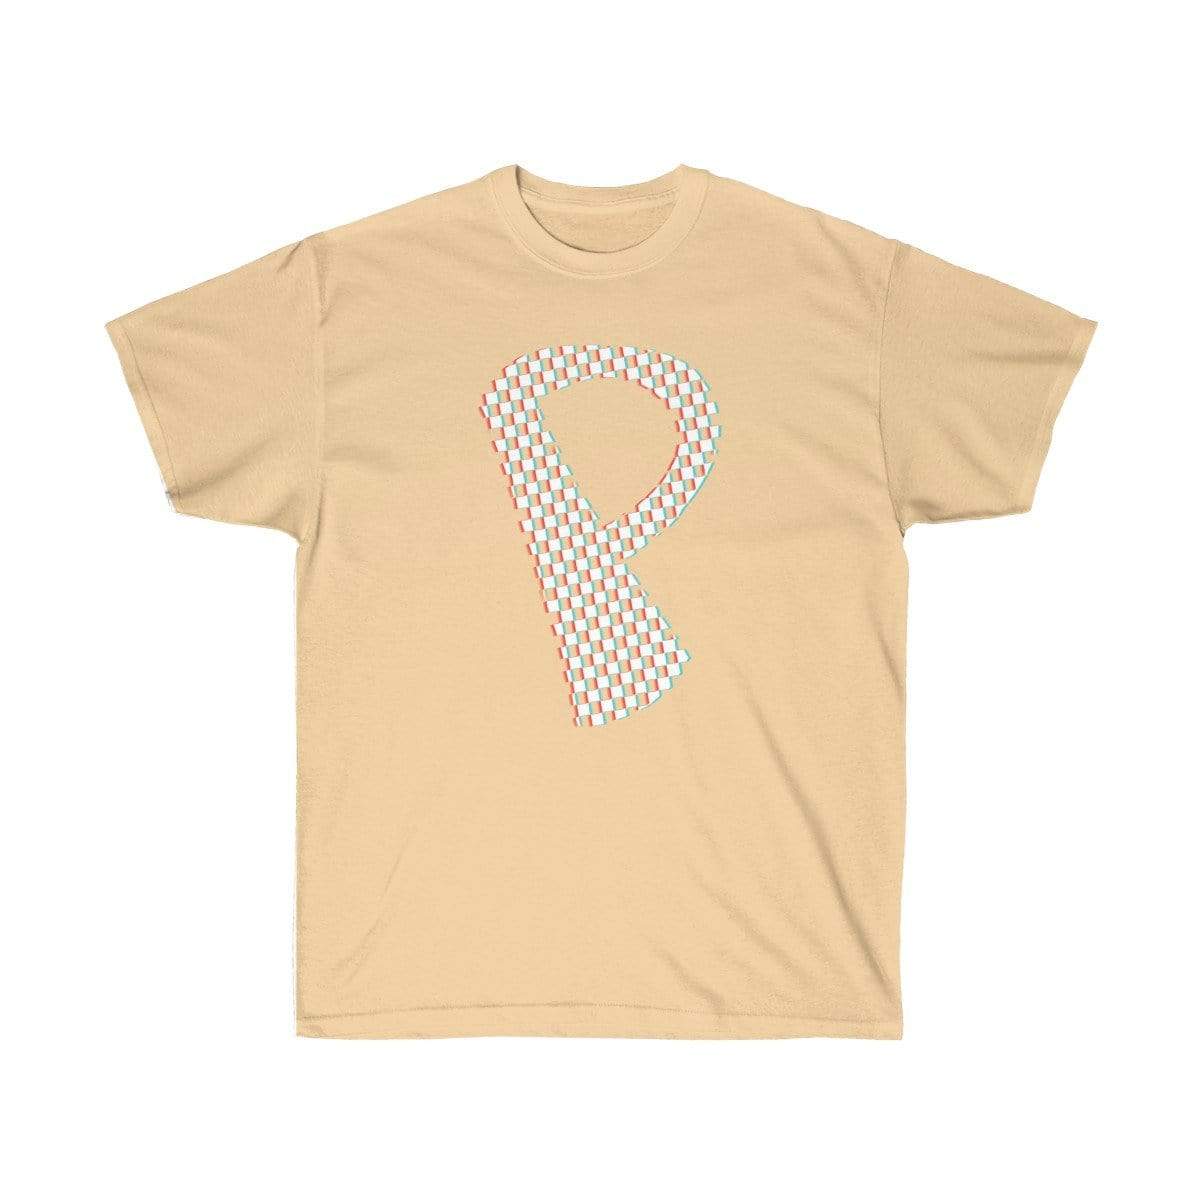 Plumskum T-Shirt Vegas Gold / S Checkered, Glitchy, Capital P T-Shirt